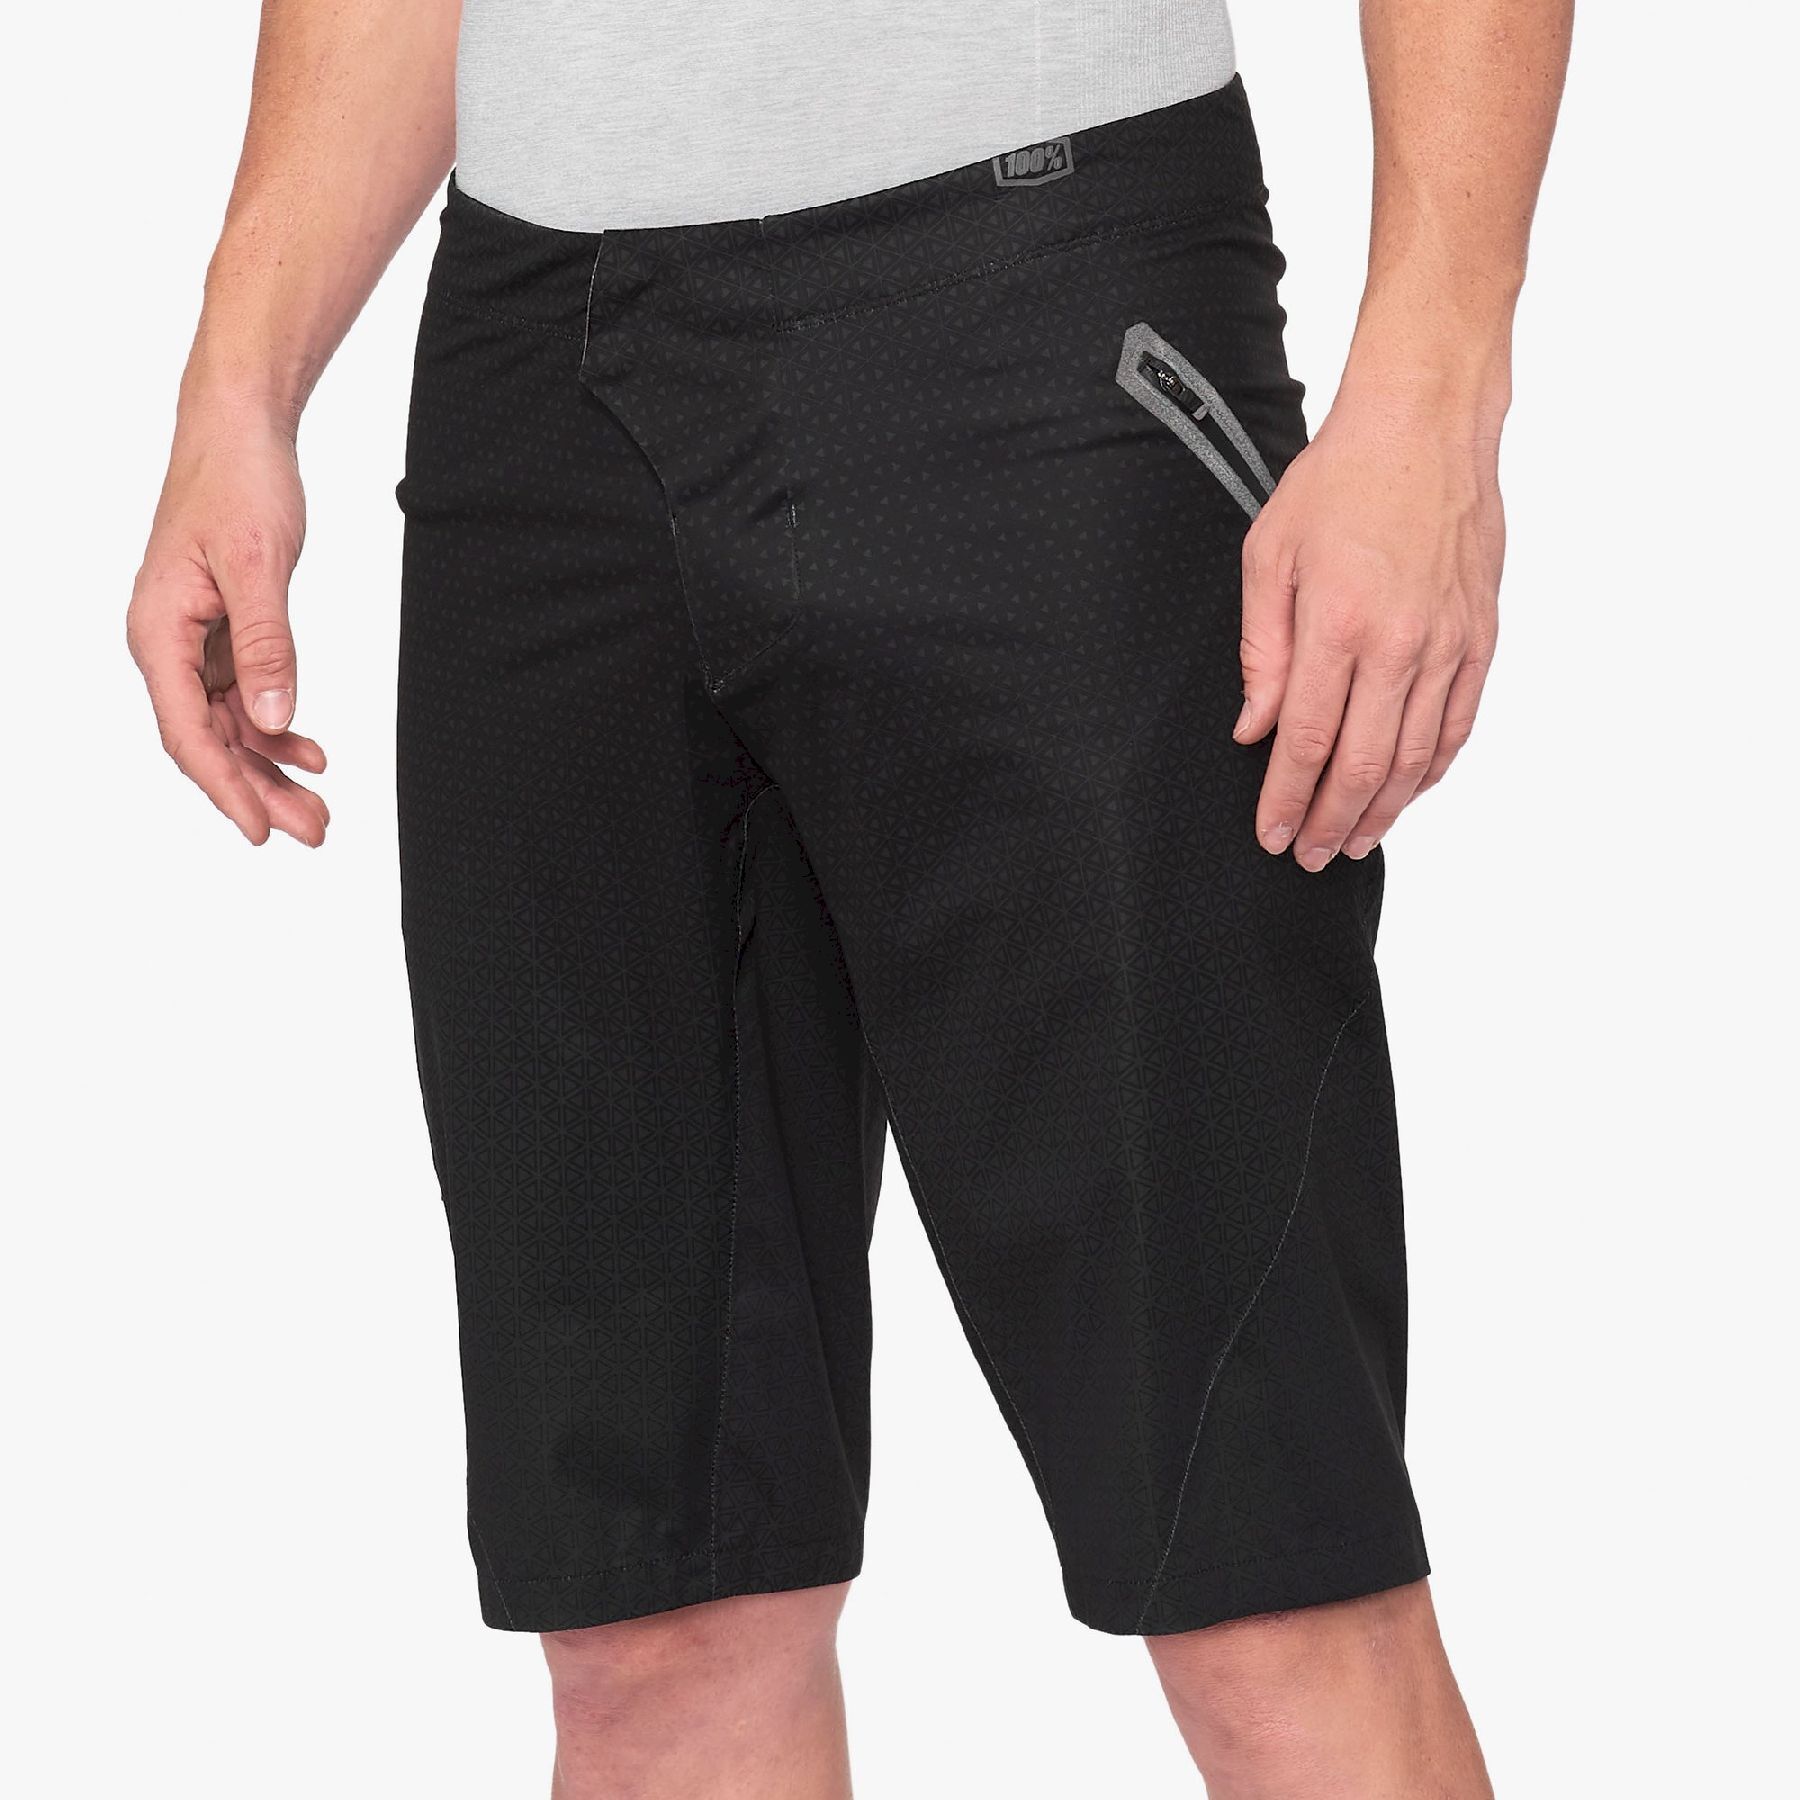 100% Hydromatic - MTB-Shorts - Herren